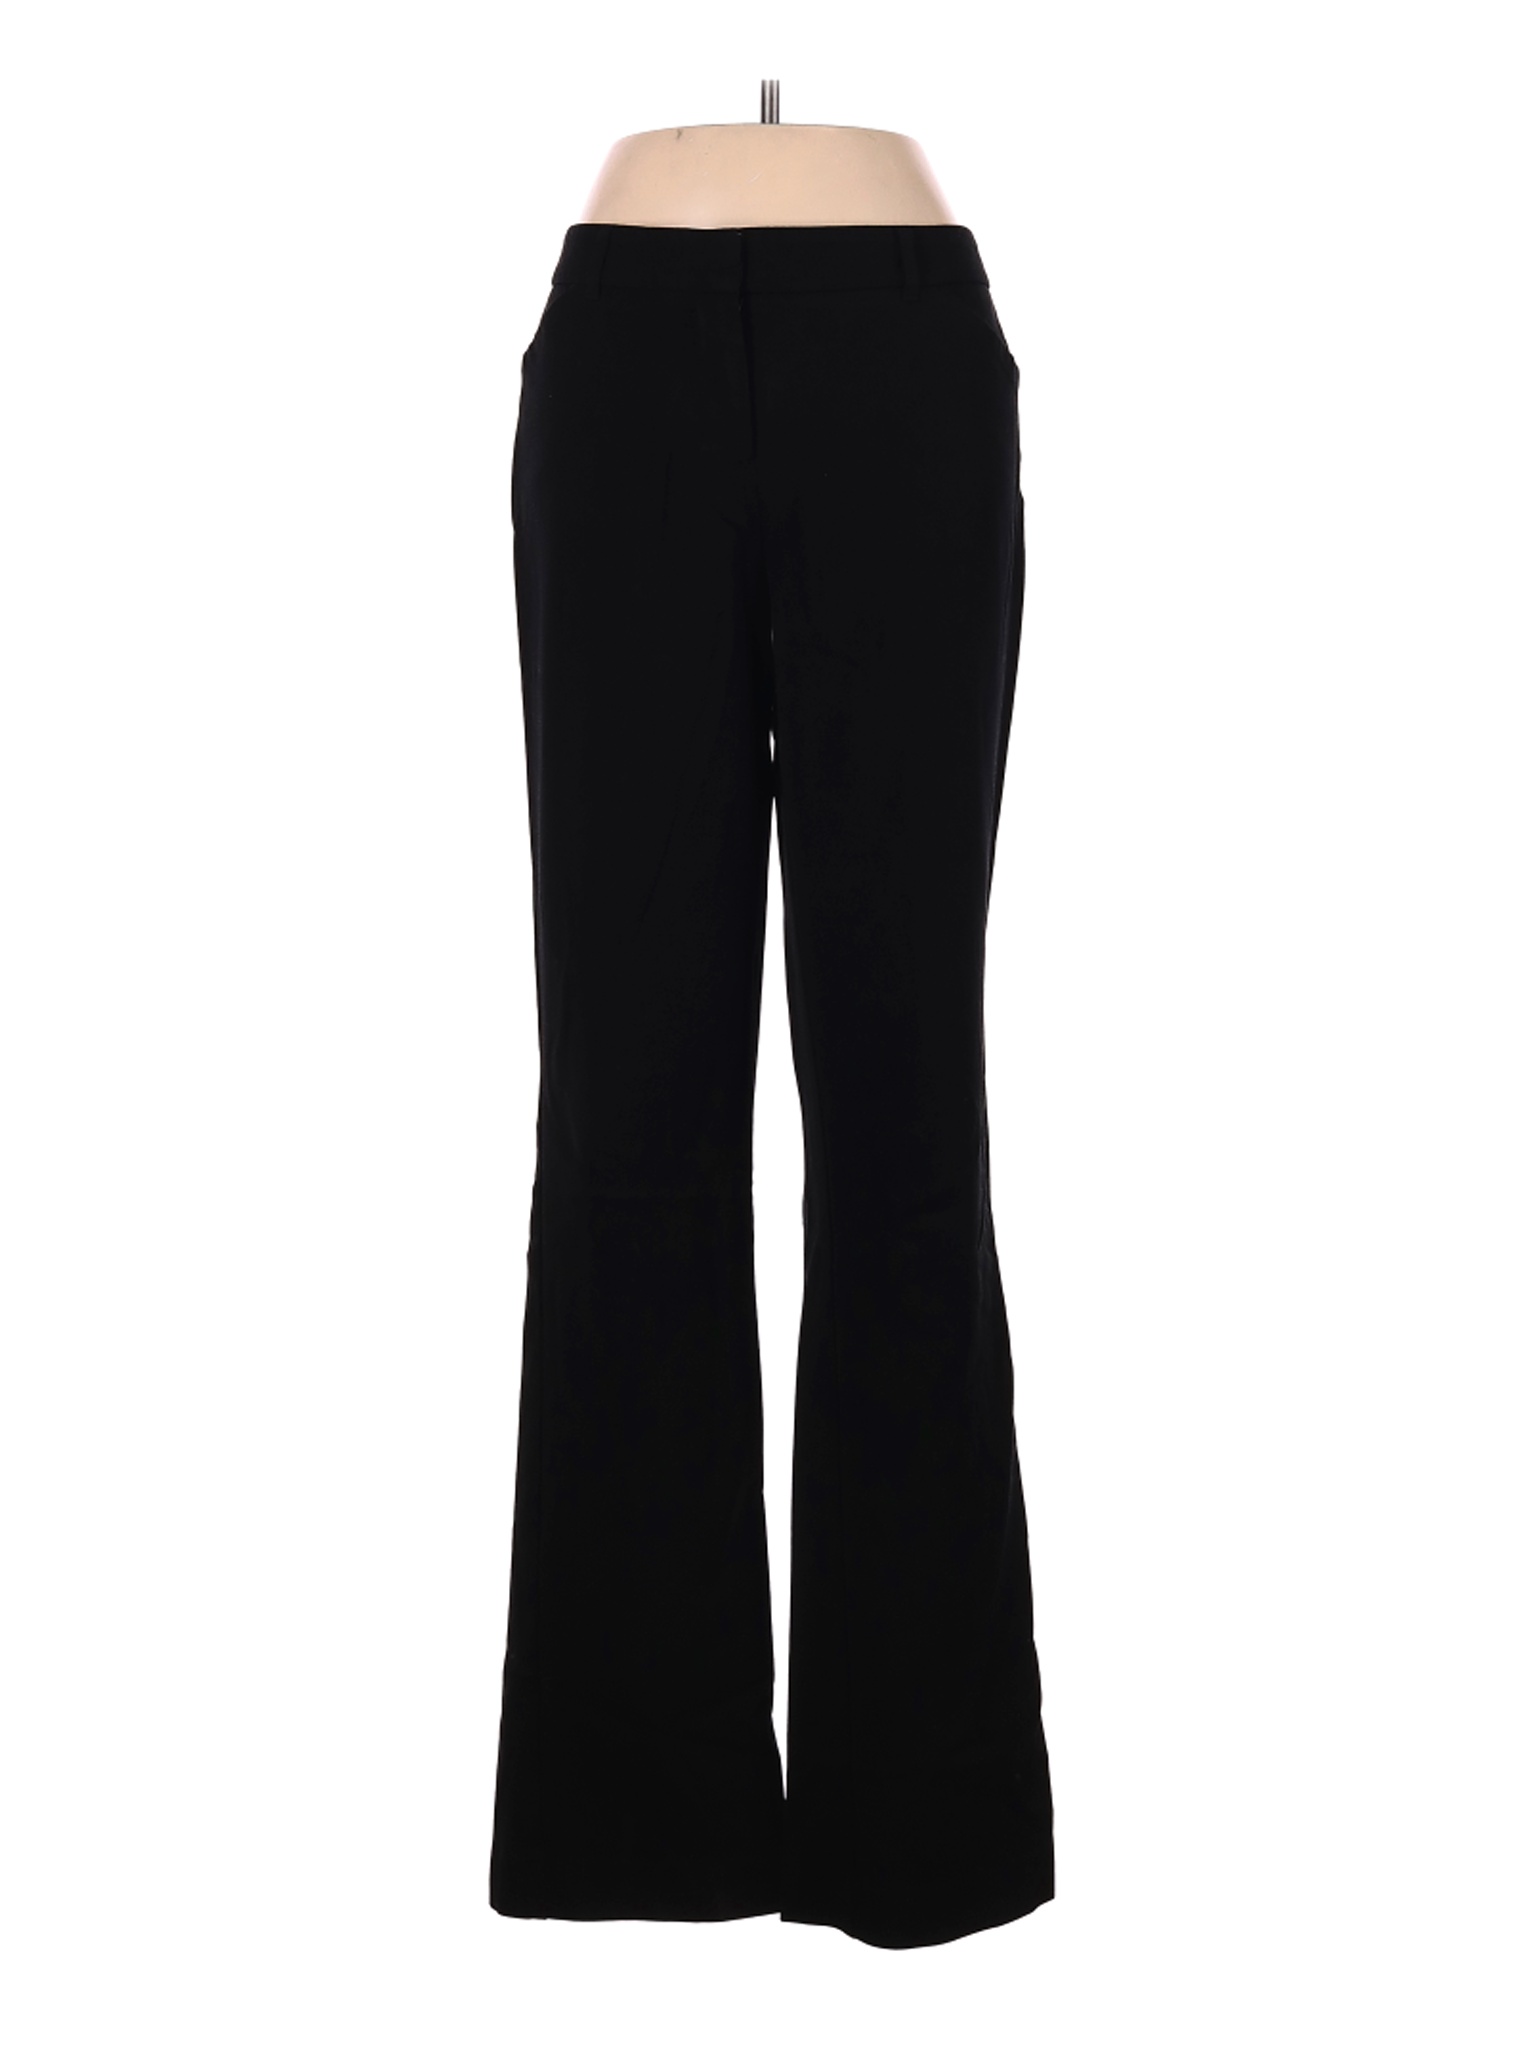 Maurices Women Black Dress Pants 7 Tall | eBay